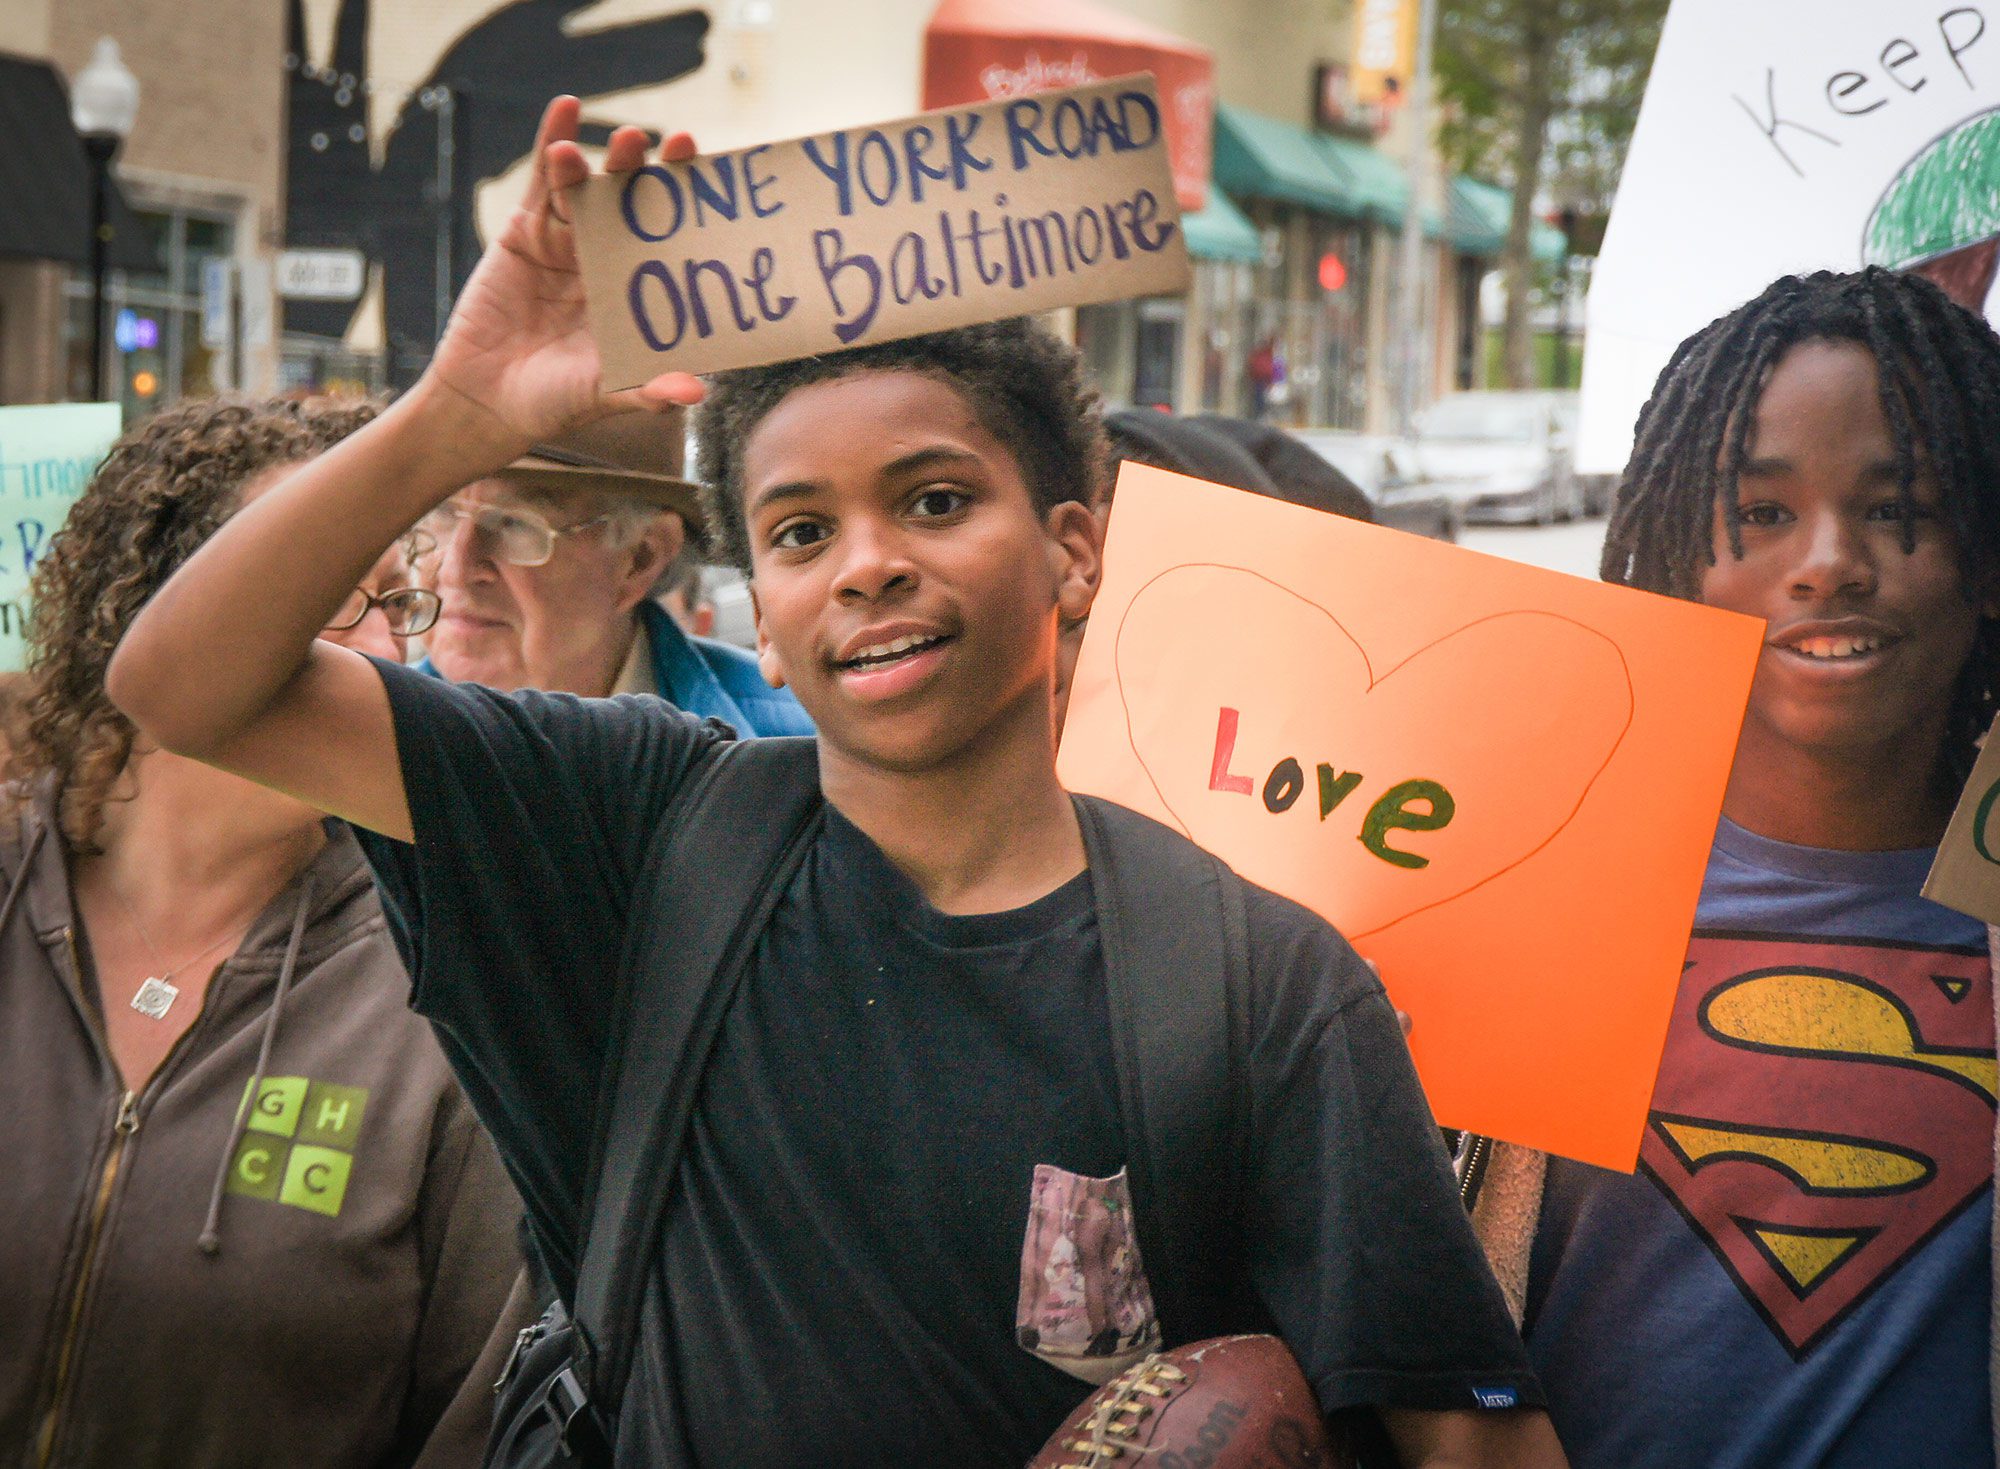 Baltimore event Photographer captures community